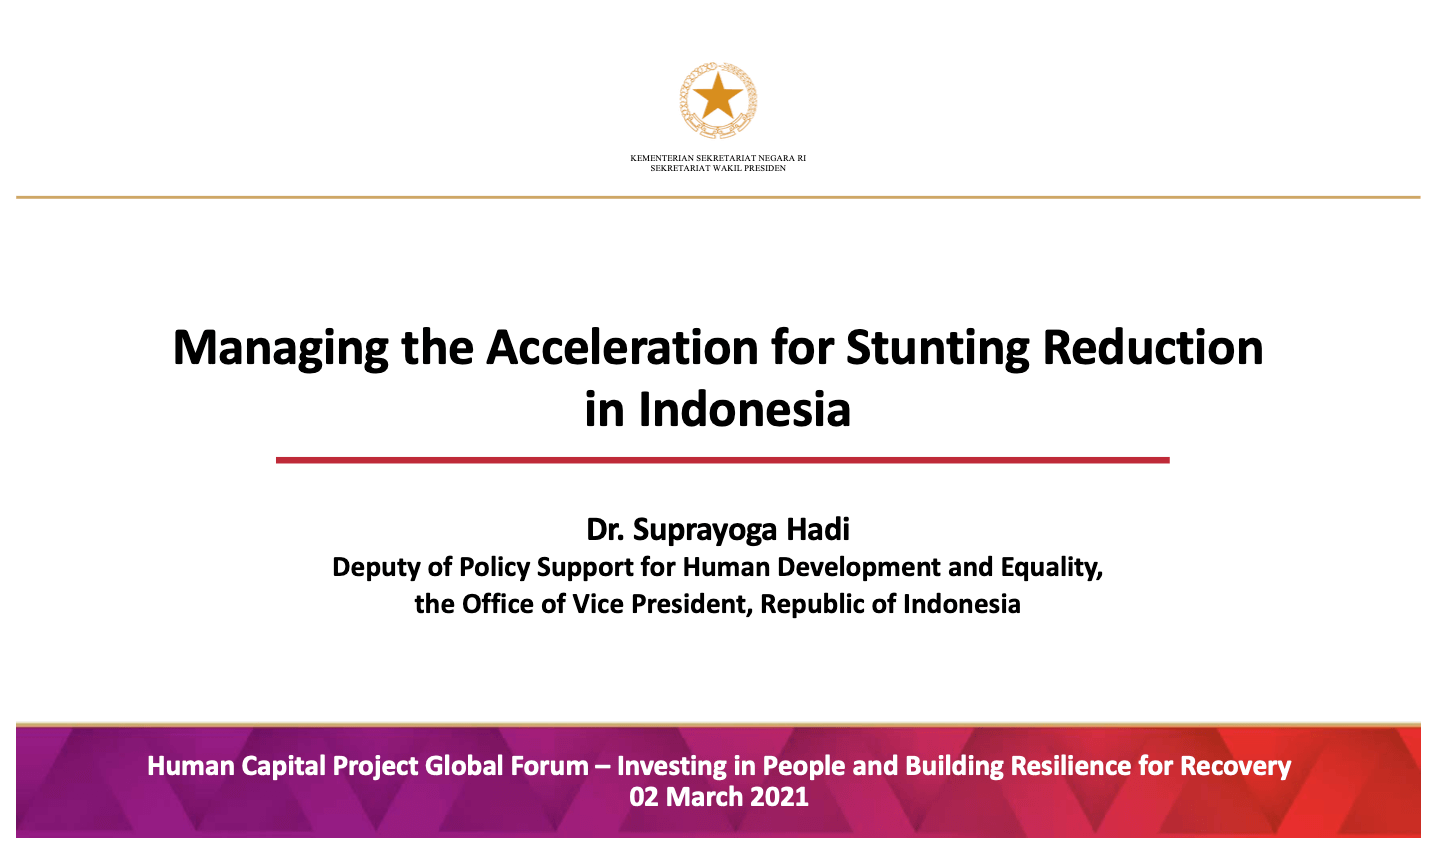 Indonesia Mitigation on Stunting Prevention HDF2021